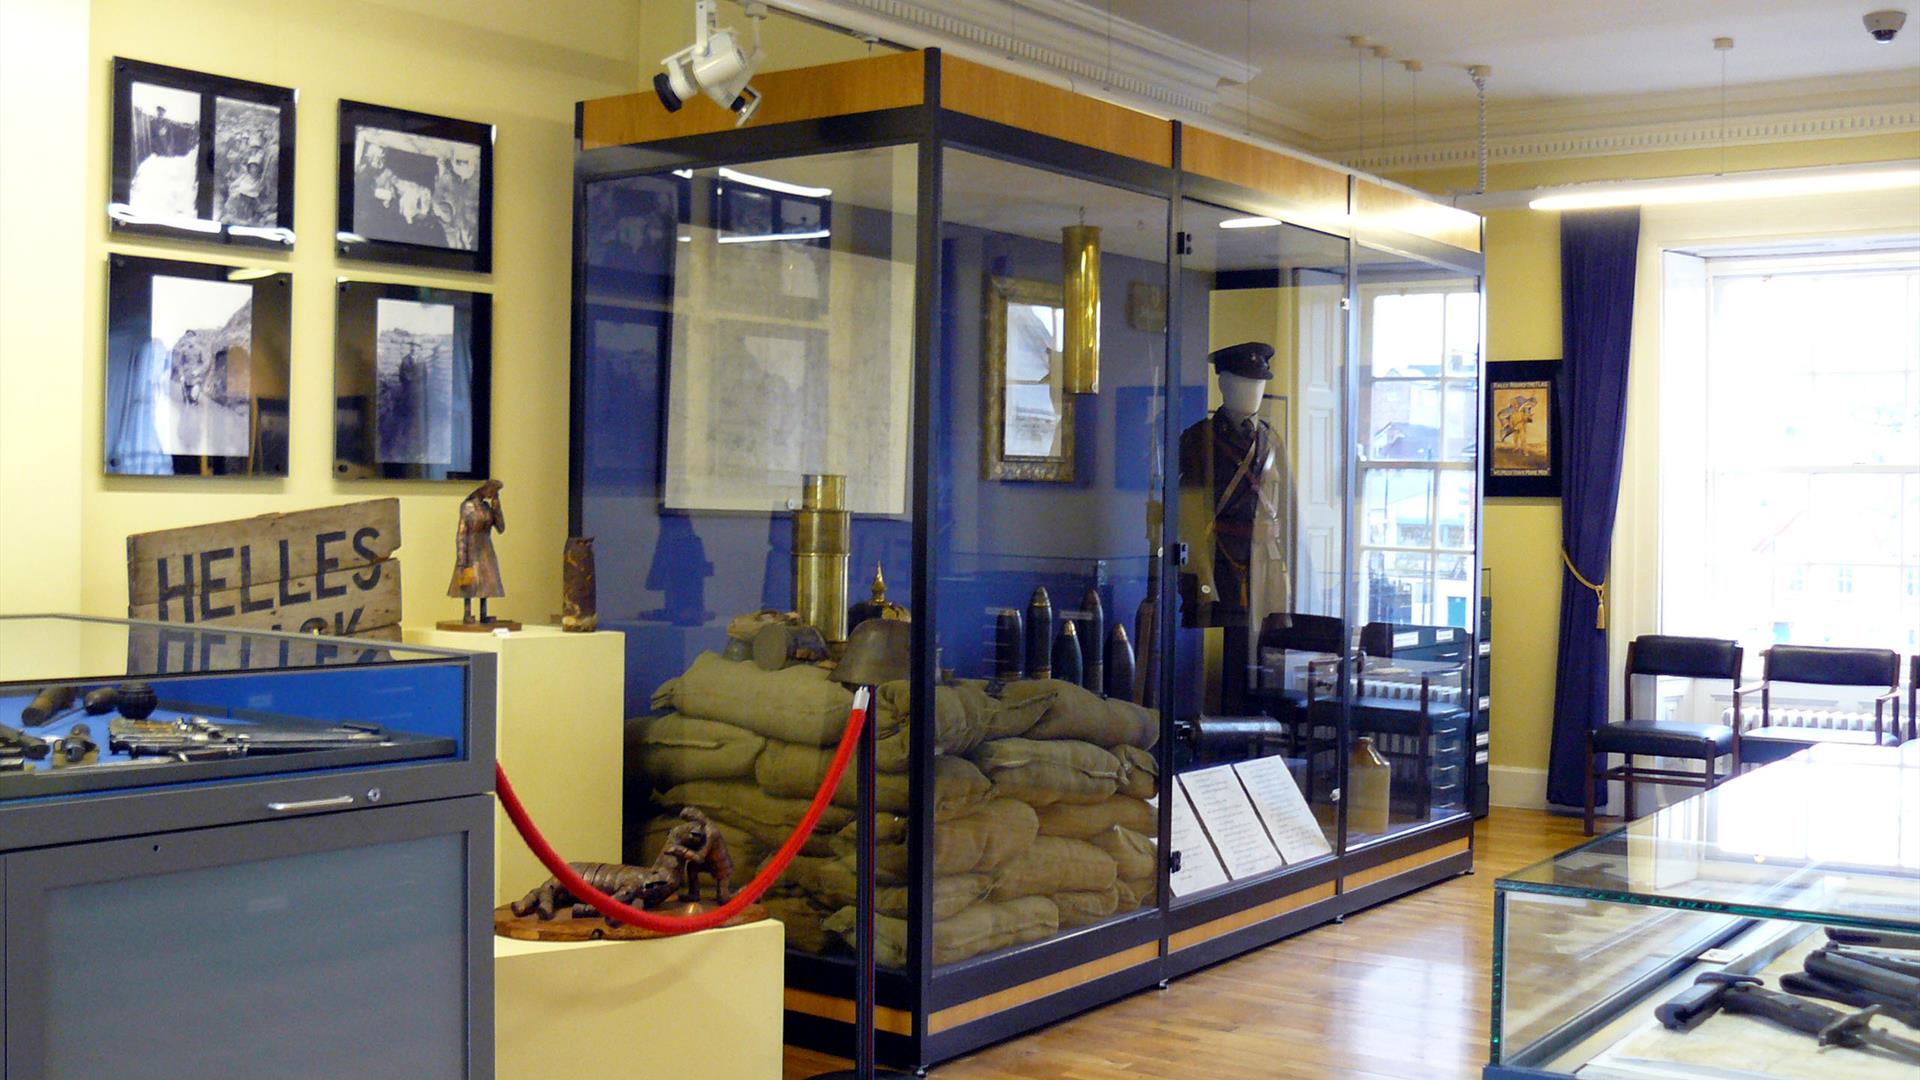 The Royal Irish Fusiliers Museum